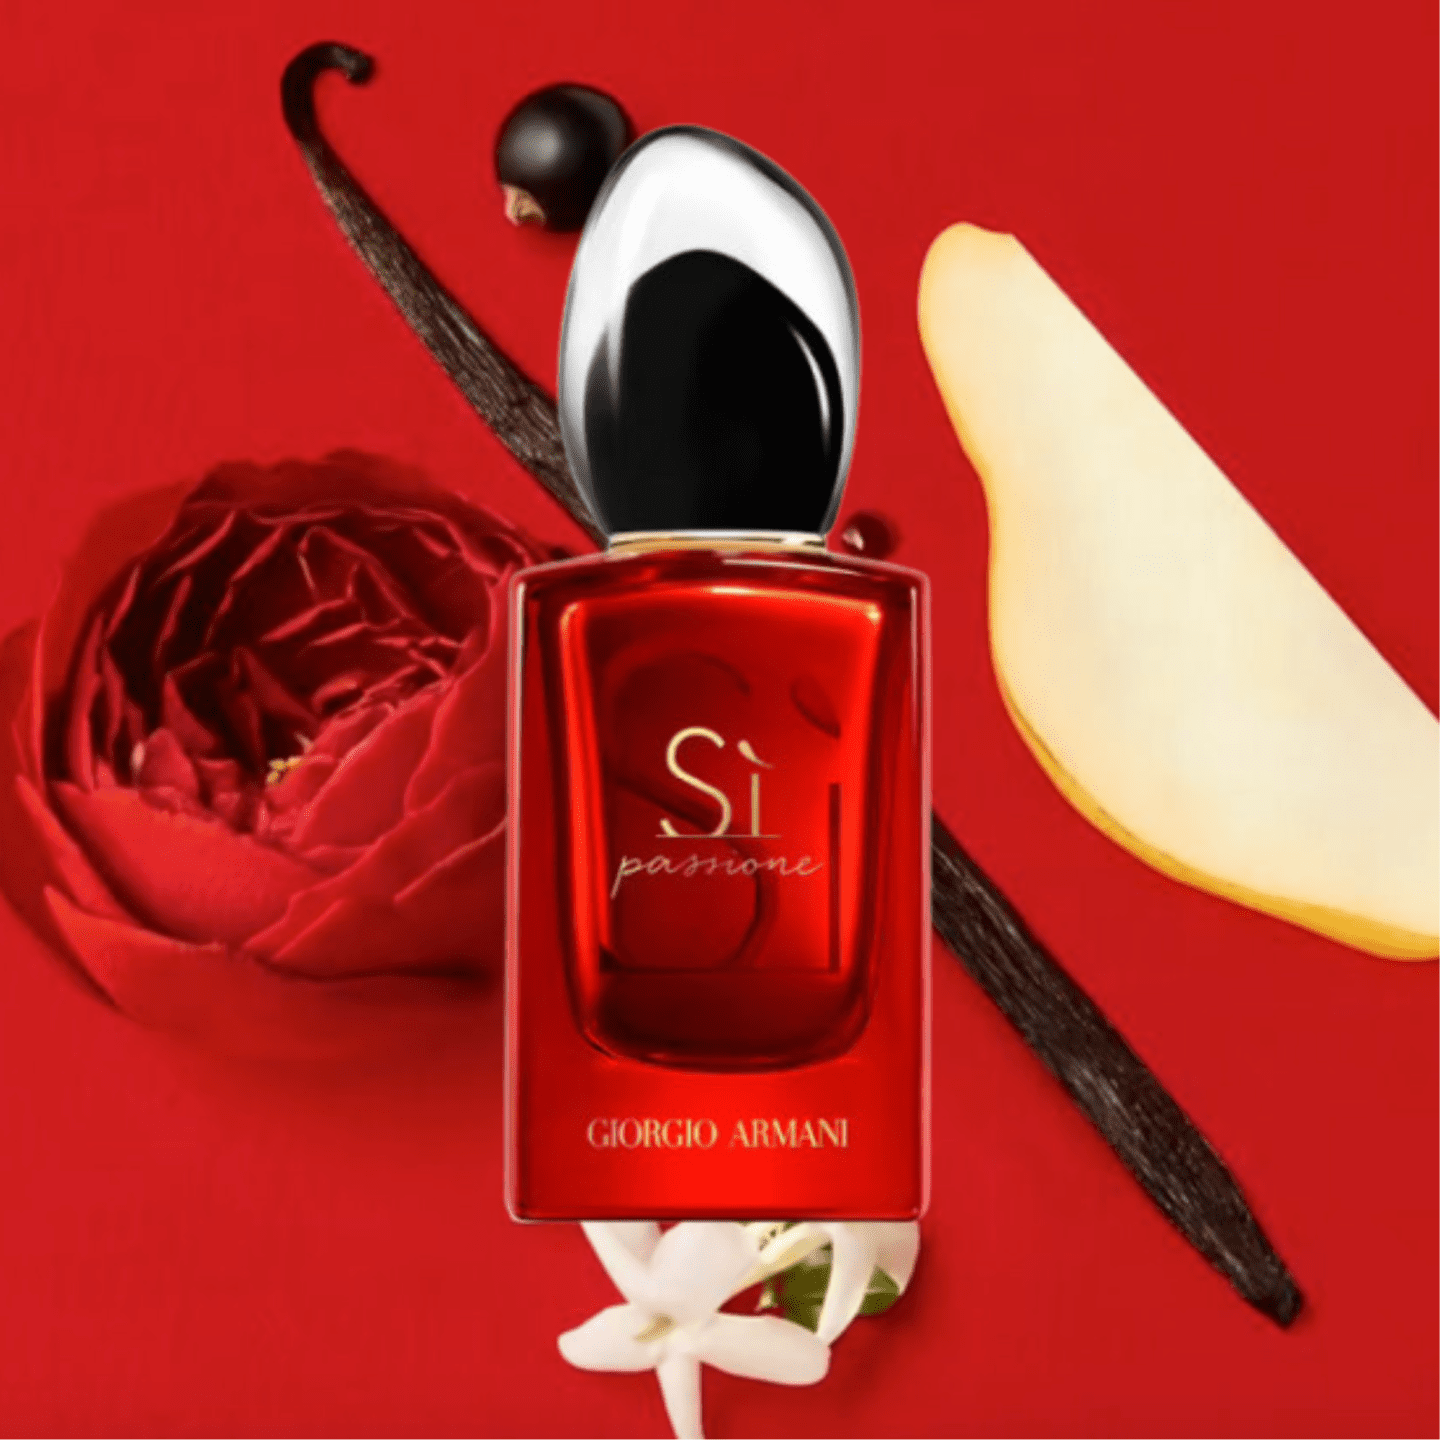 Giorgio Armani Sì Passione Eau de Parfum Laser Exclusive Edition